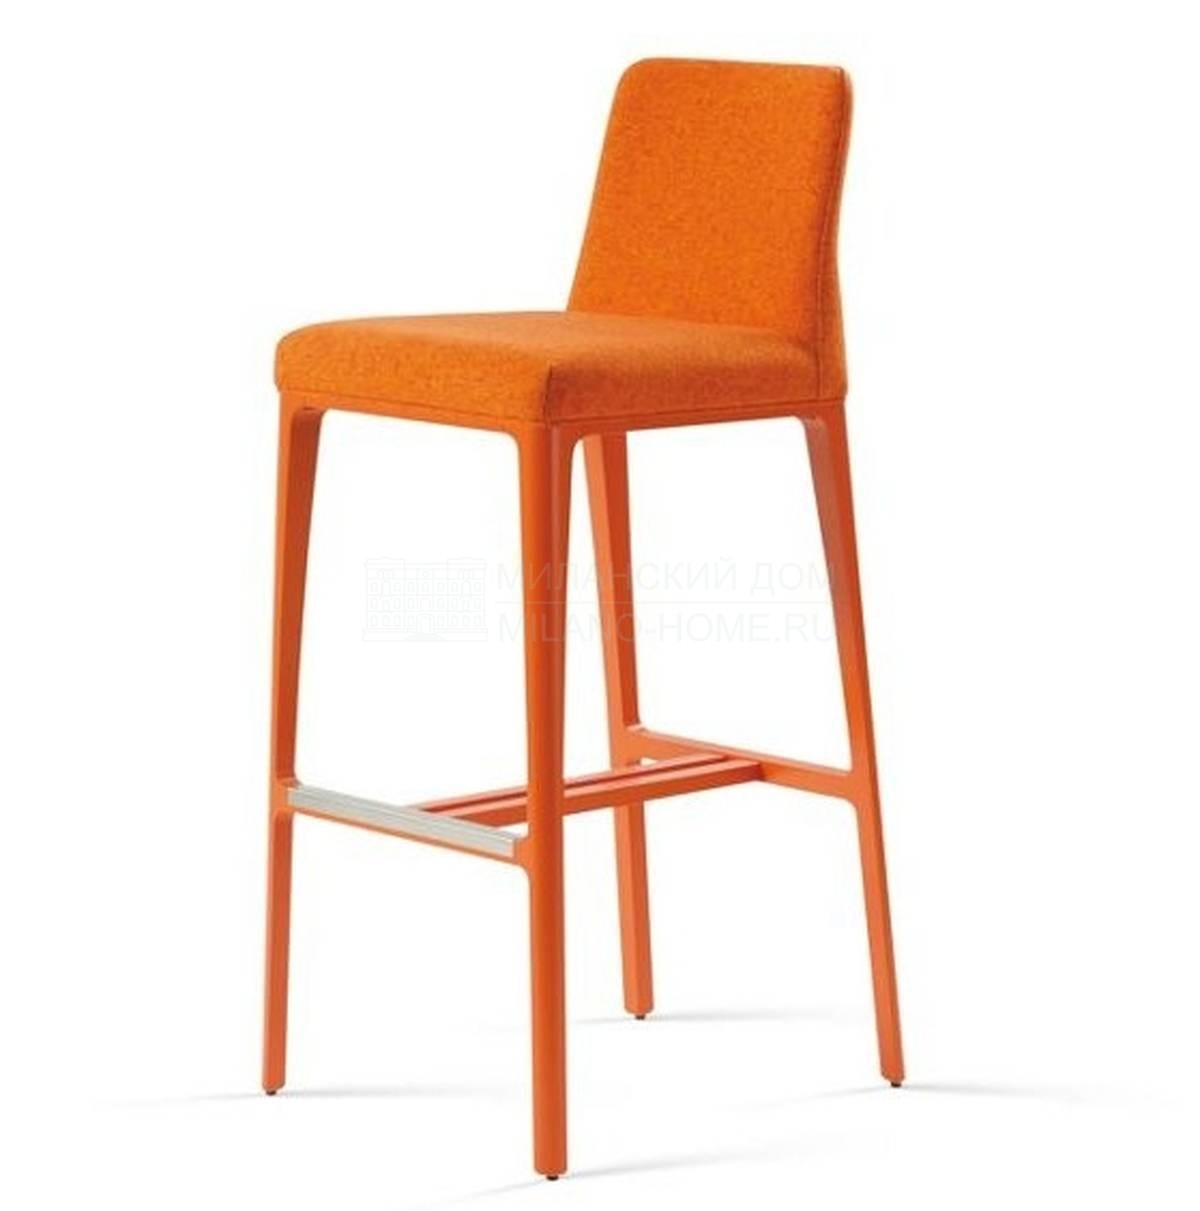 Барный стул Aida bar stool из Франции фабрики ROCHE BOBOIS